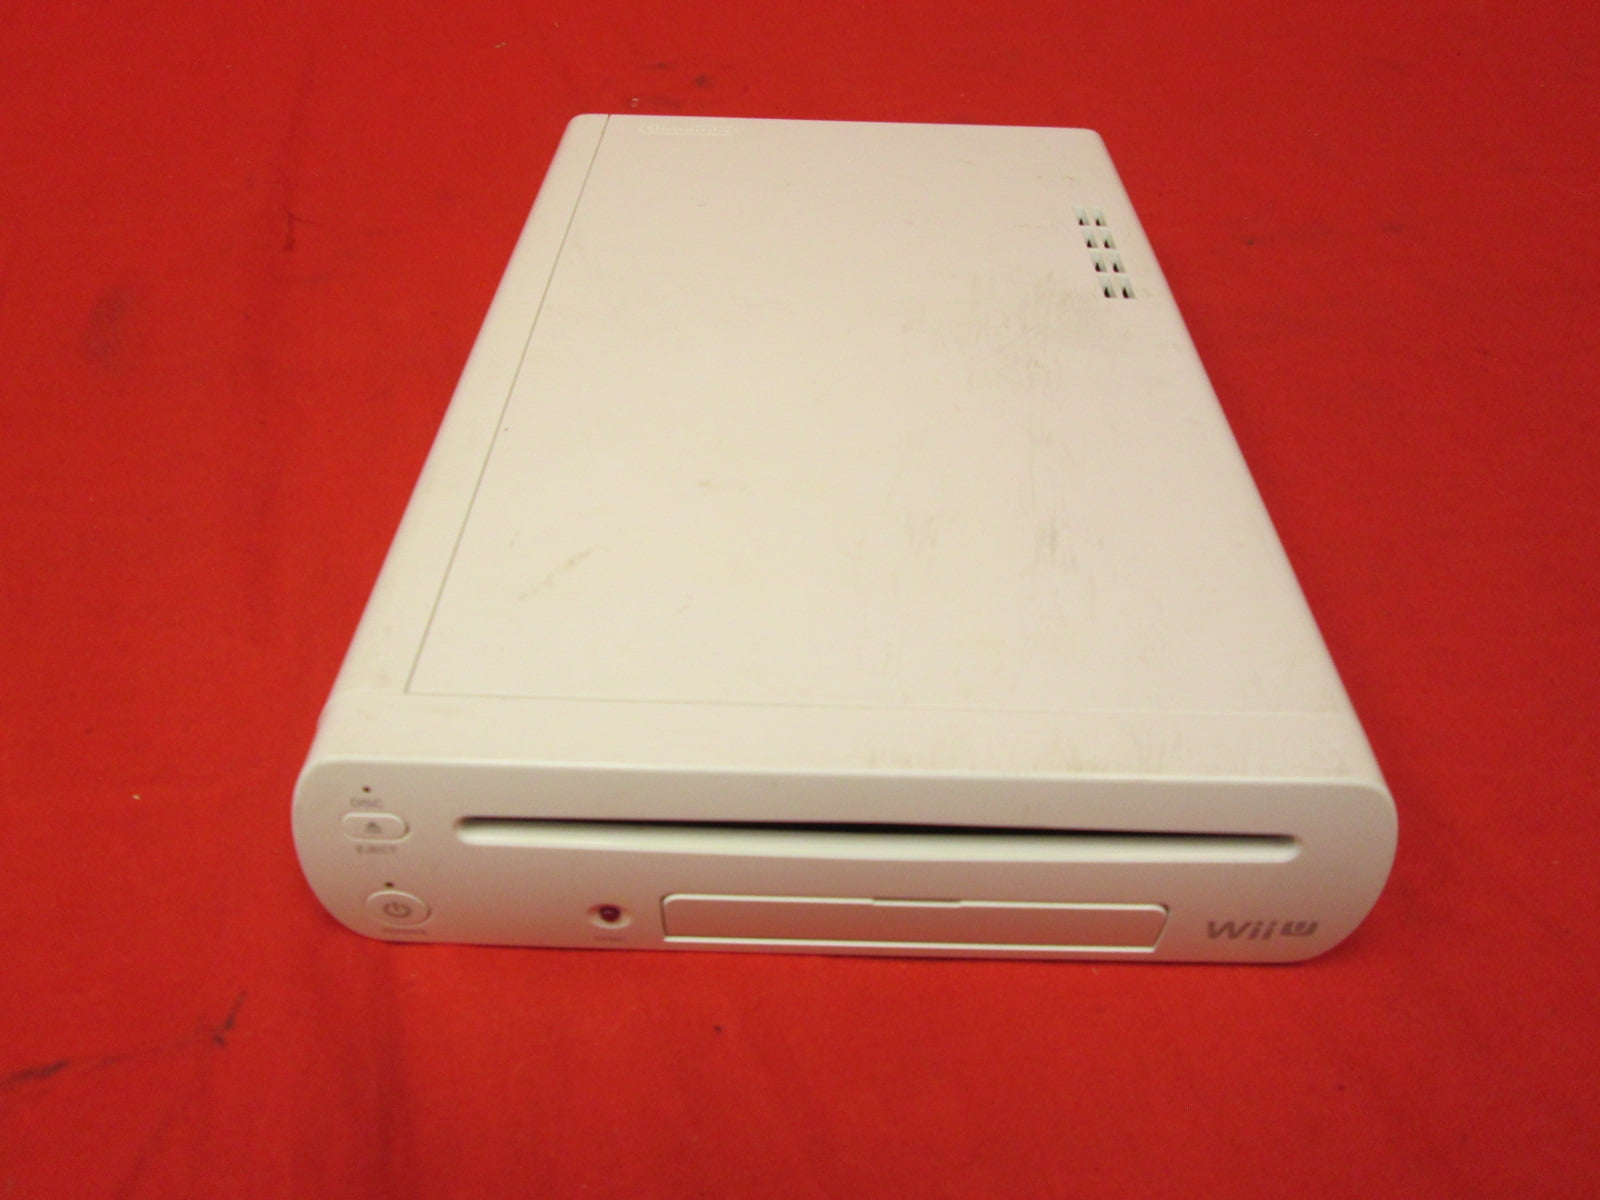 Nintendo Wii U - White Console - Good Condition 712131666016